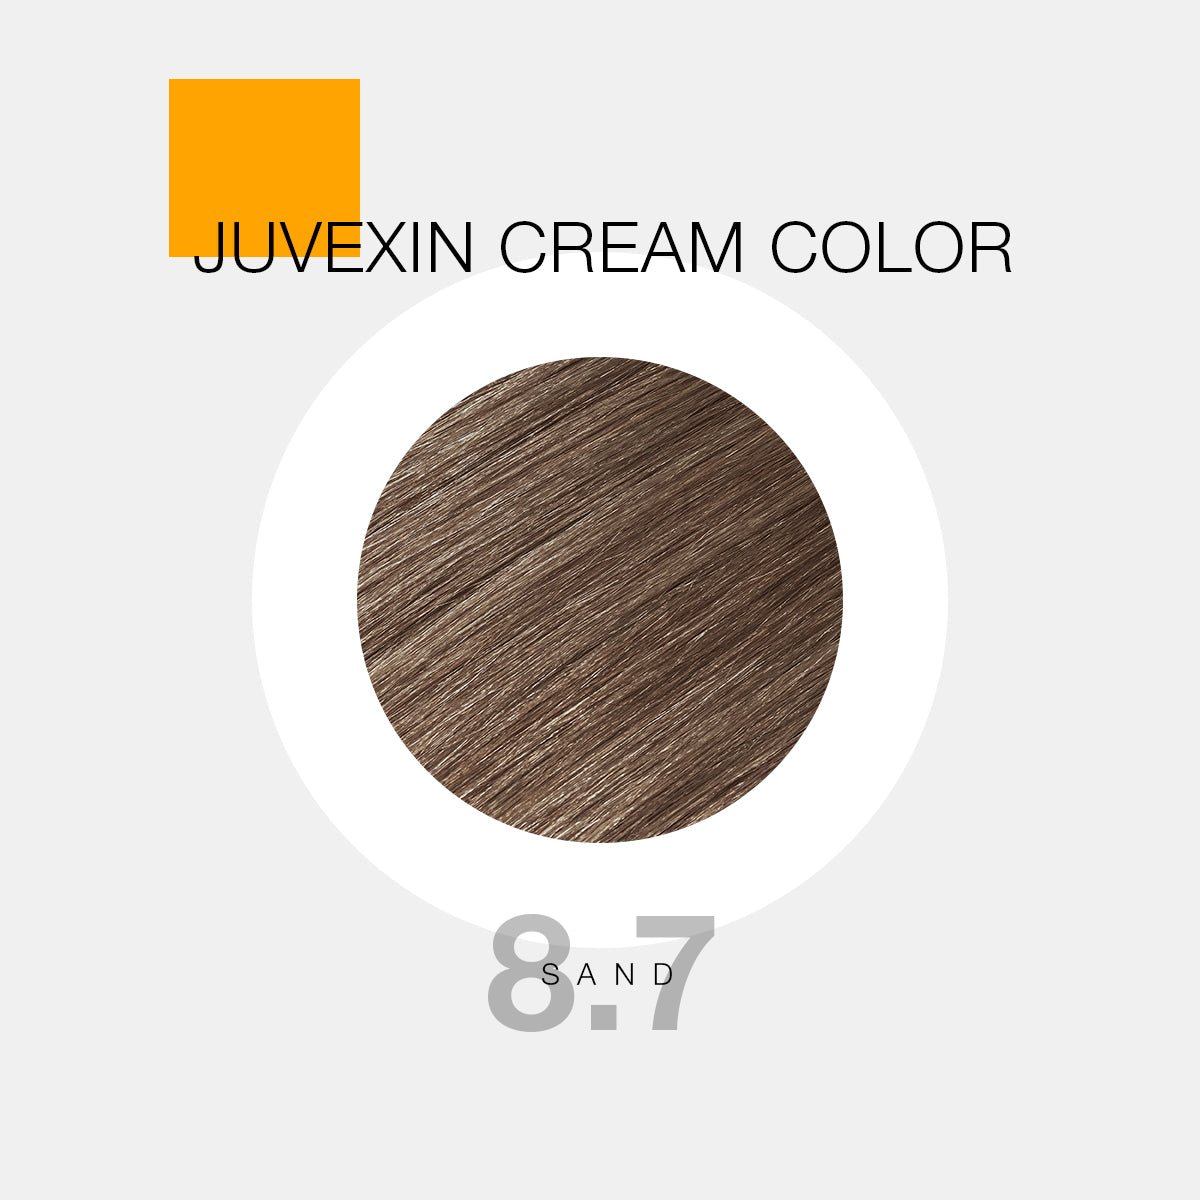 Juvexin Cream Color Pro Sand